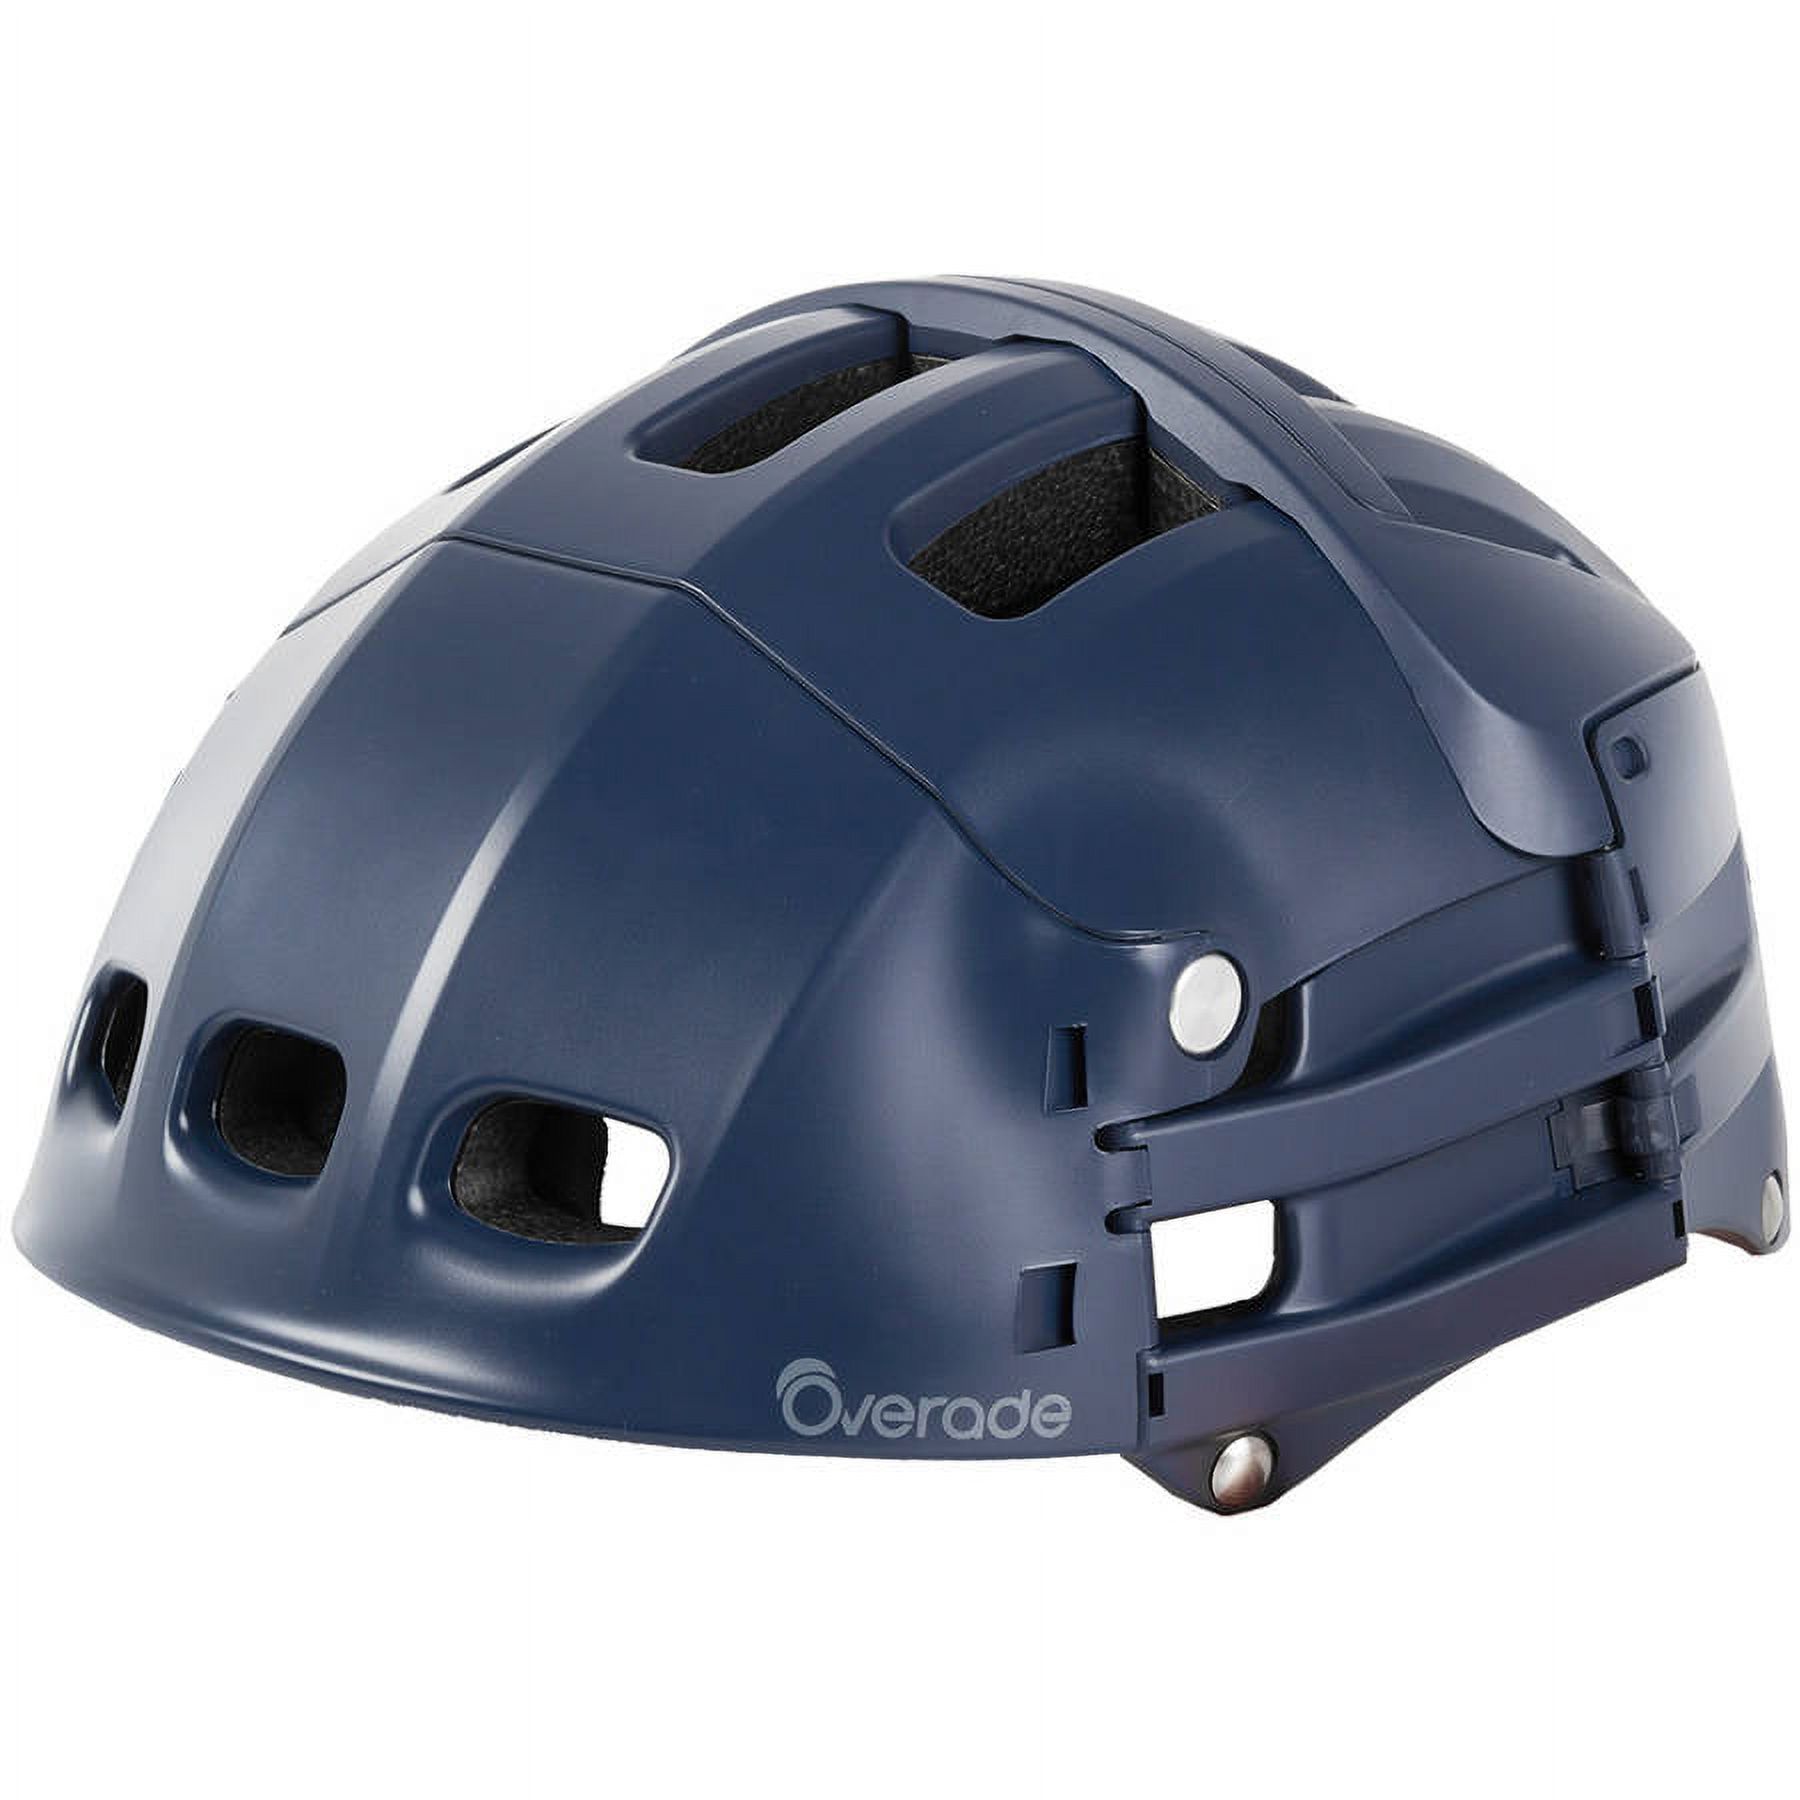 Overade Plixi Foldable Bicycle Helmet, Navy Blue, 54-58cm - image 1 of 11